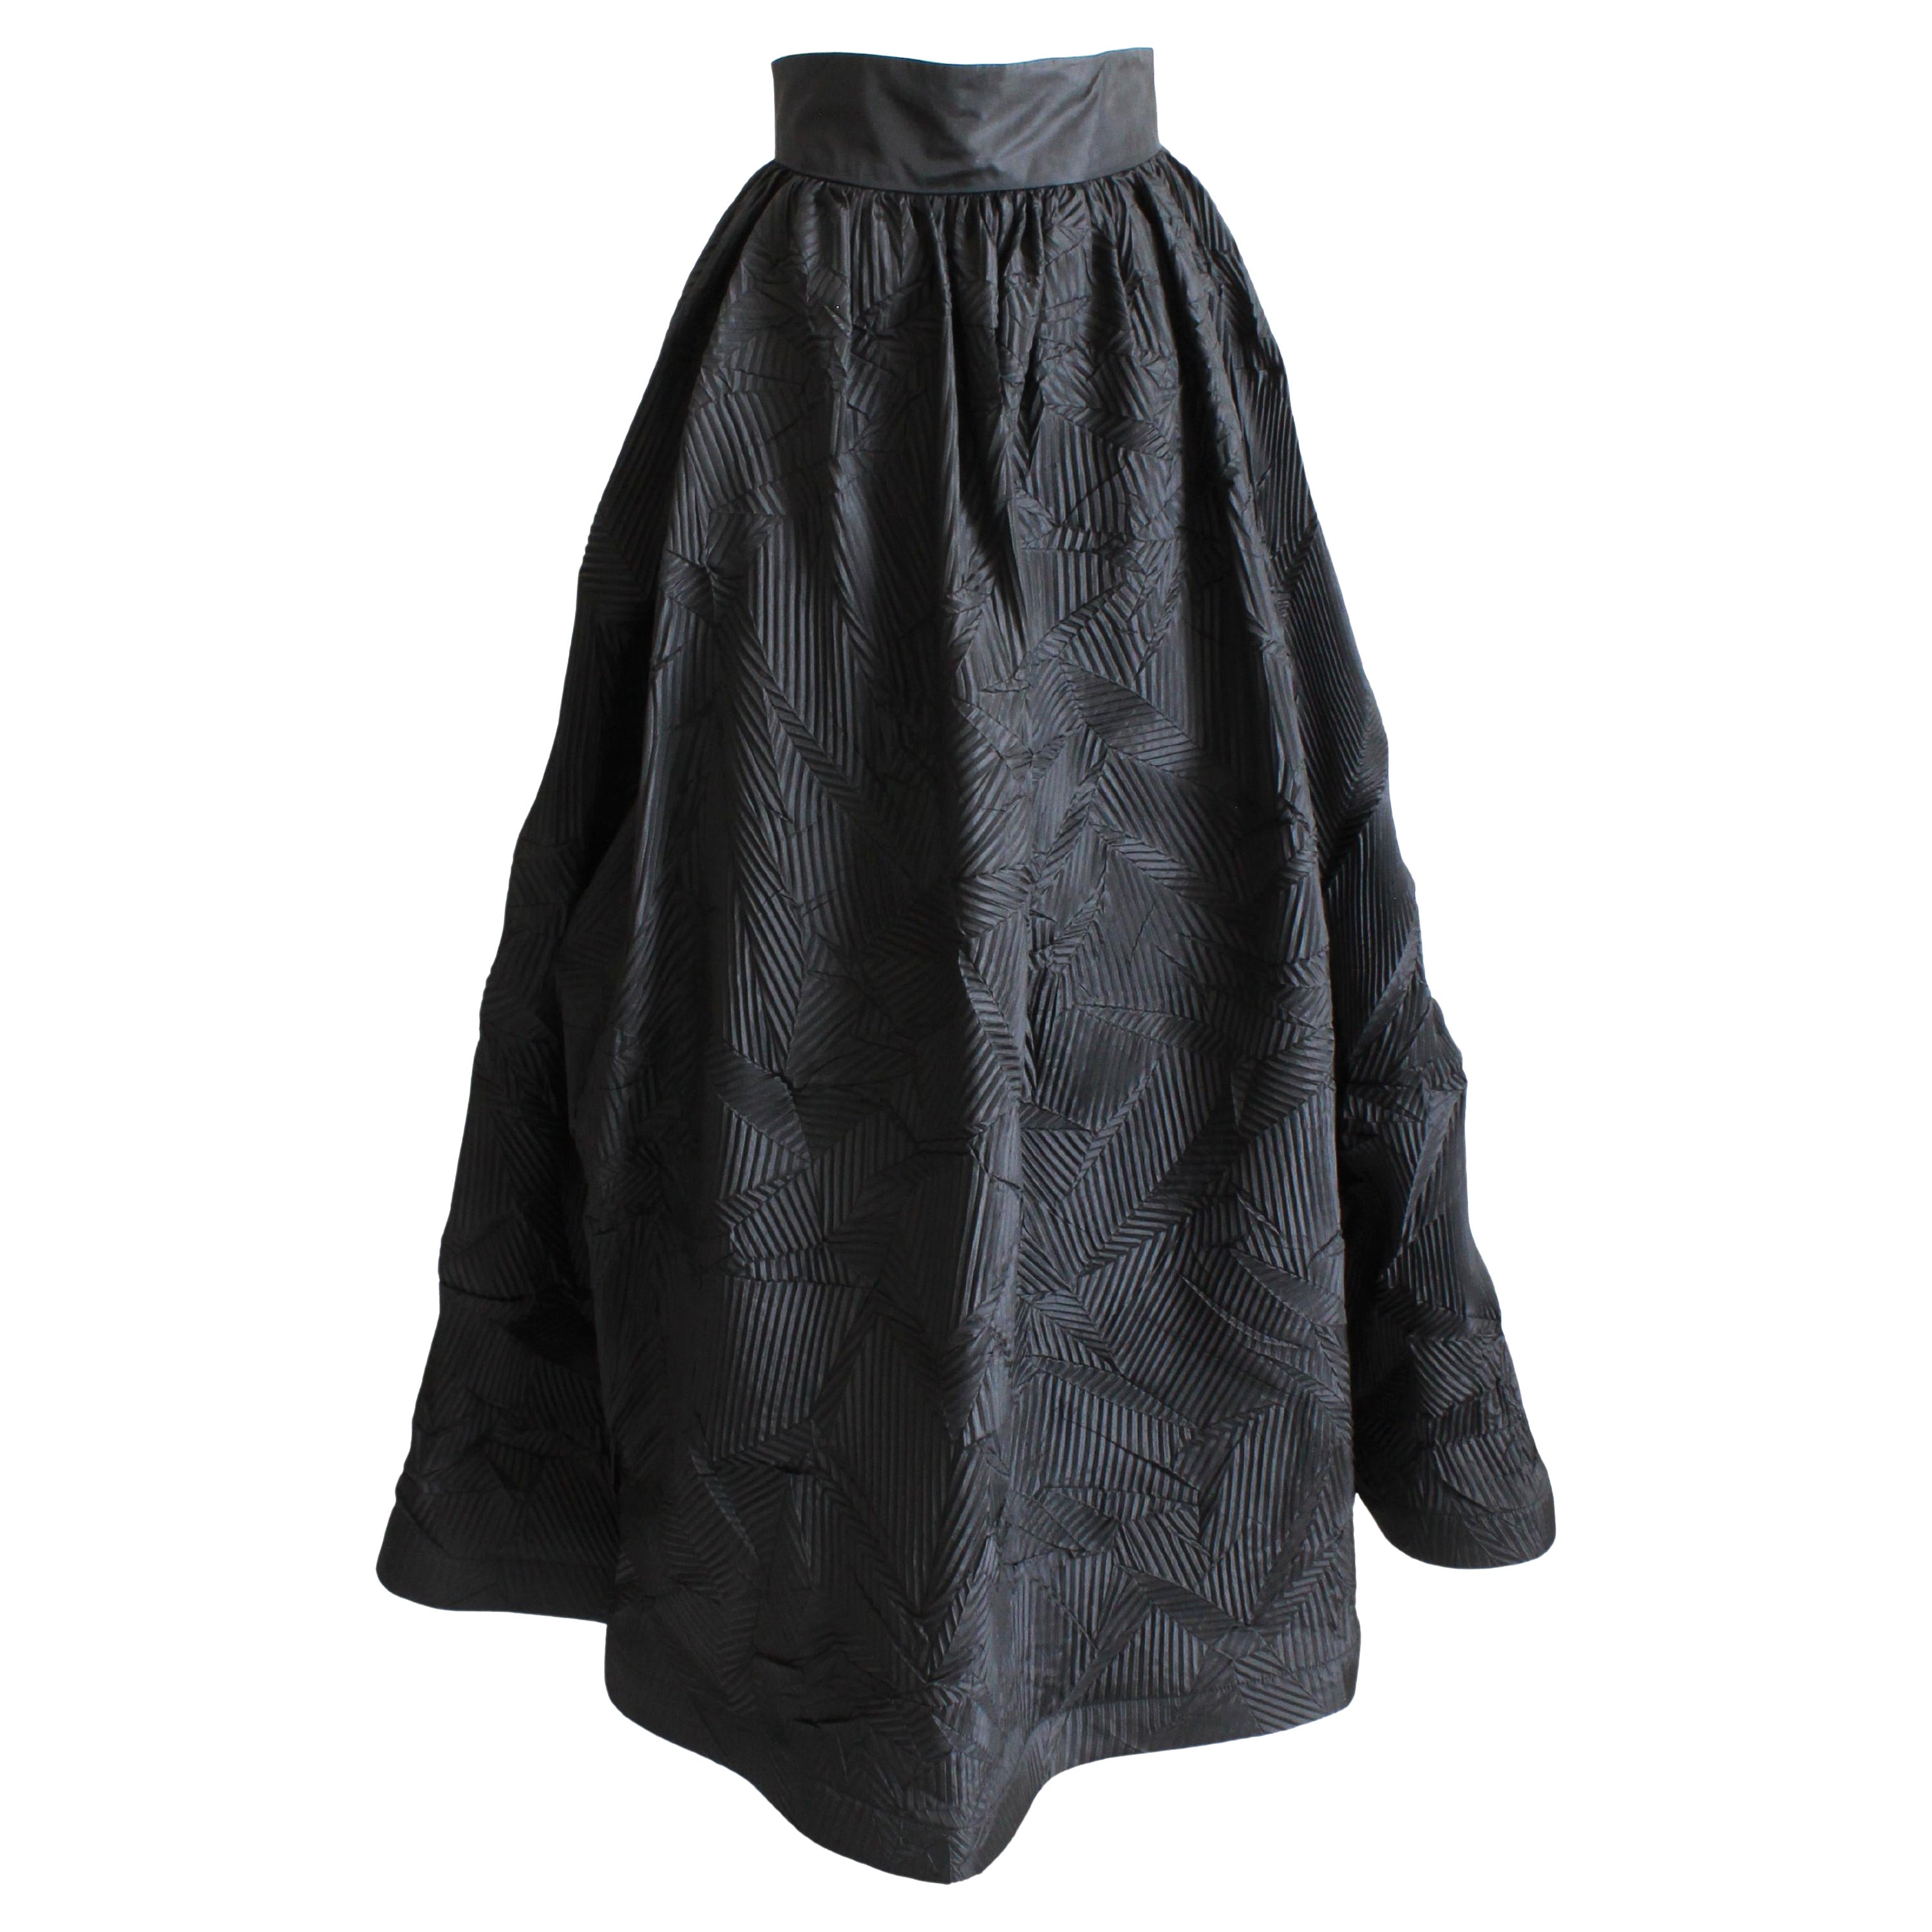 Sully Bonnelly Formal Skirt Black Full Length Abstract Pleated Avant Garde Sz 8